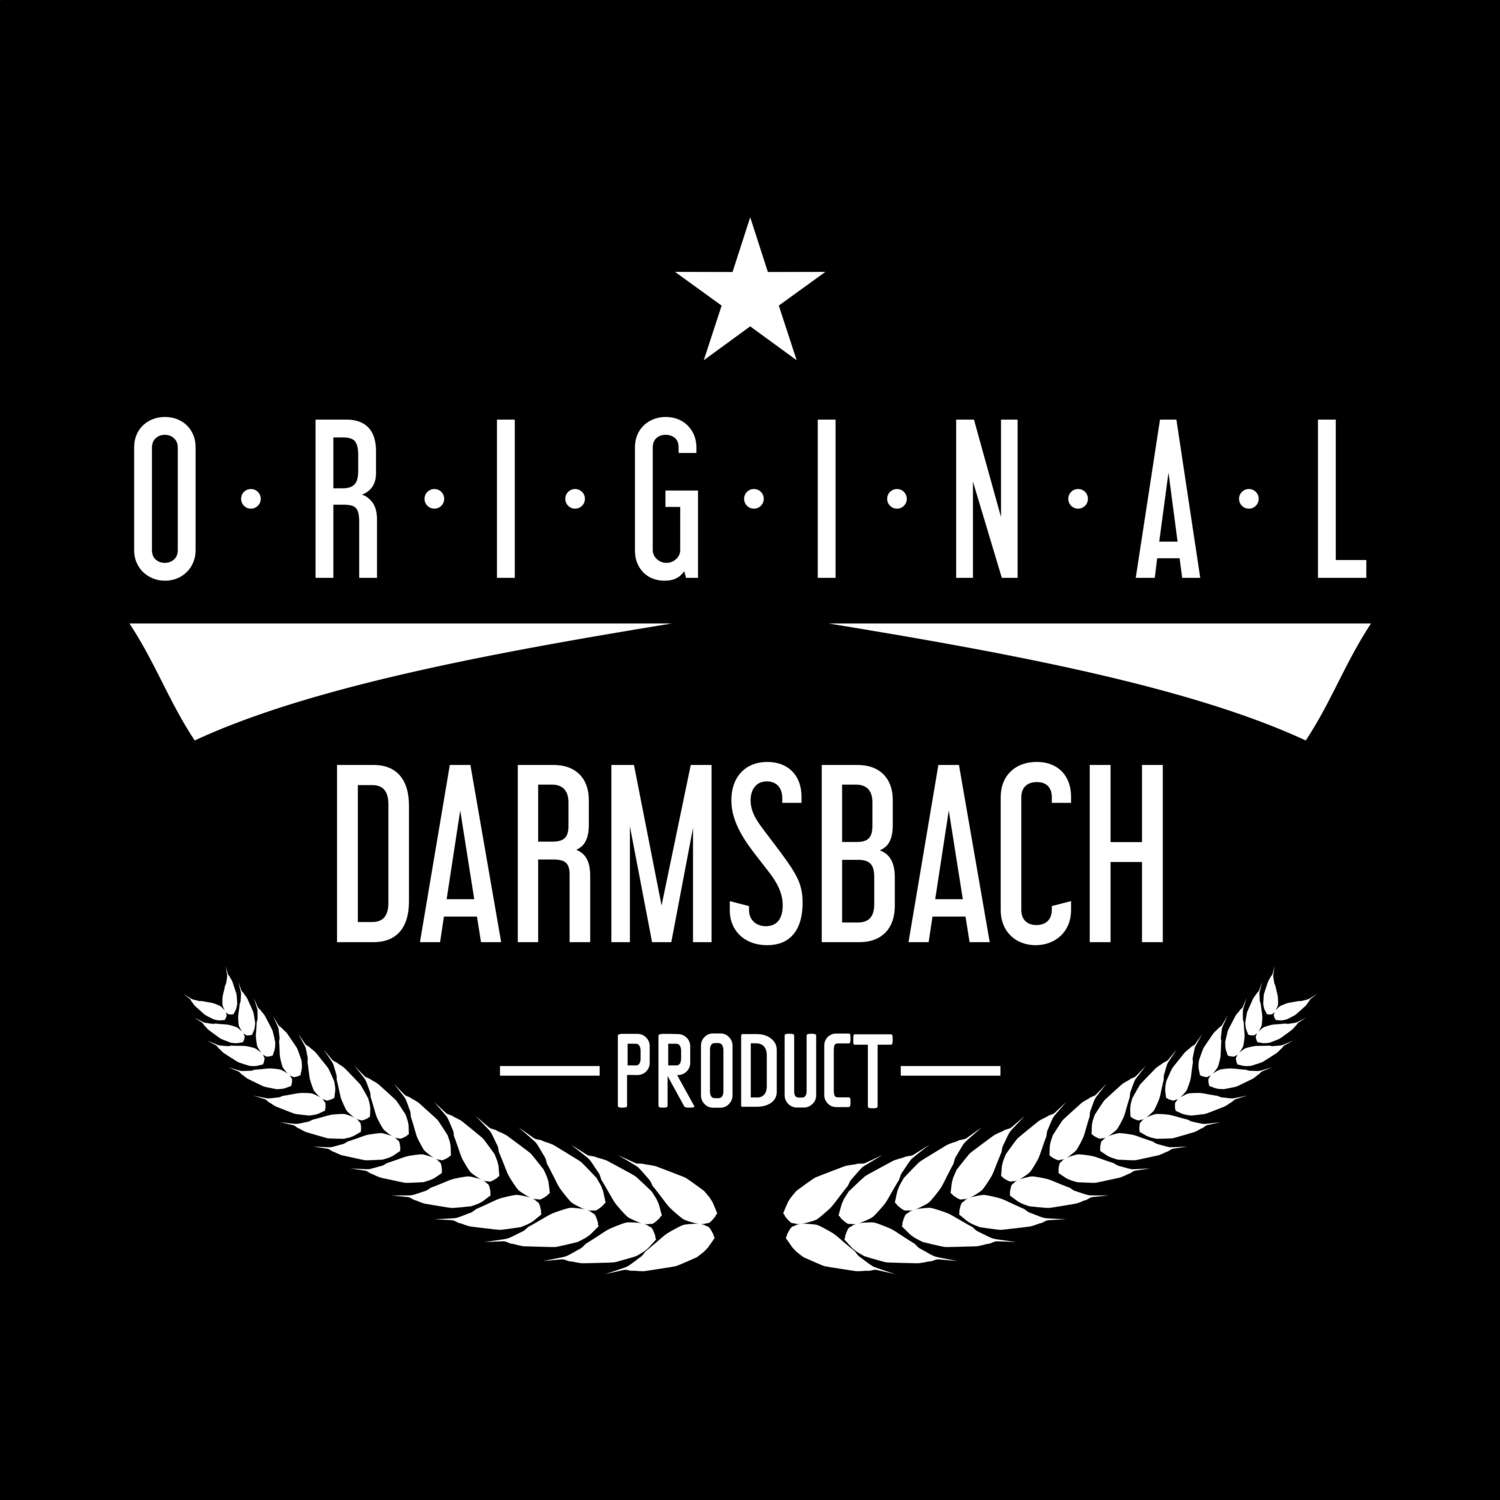 Darmsbach T-Shirt »Original Product«